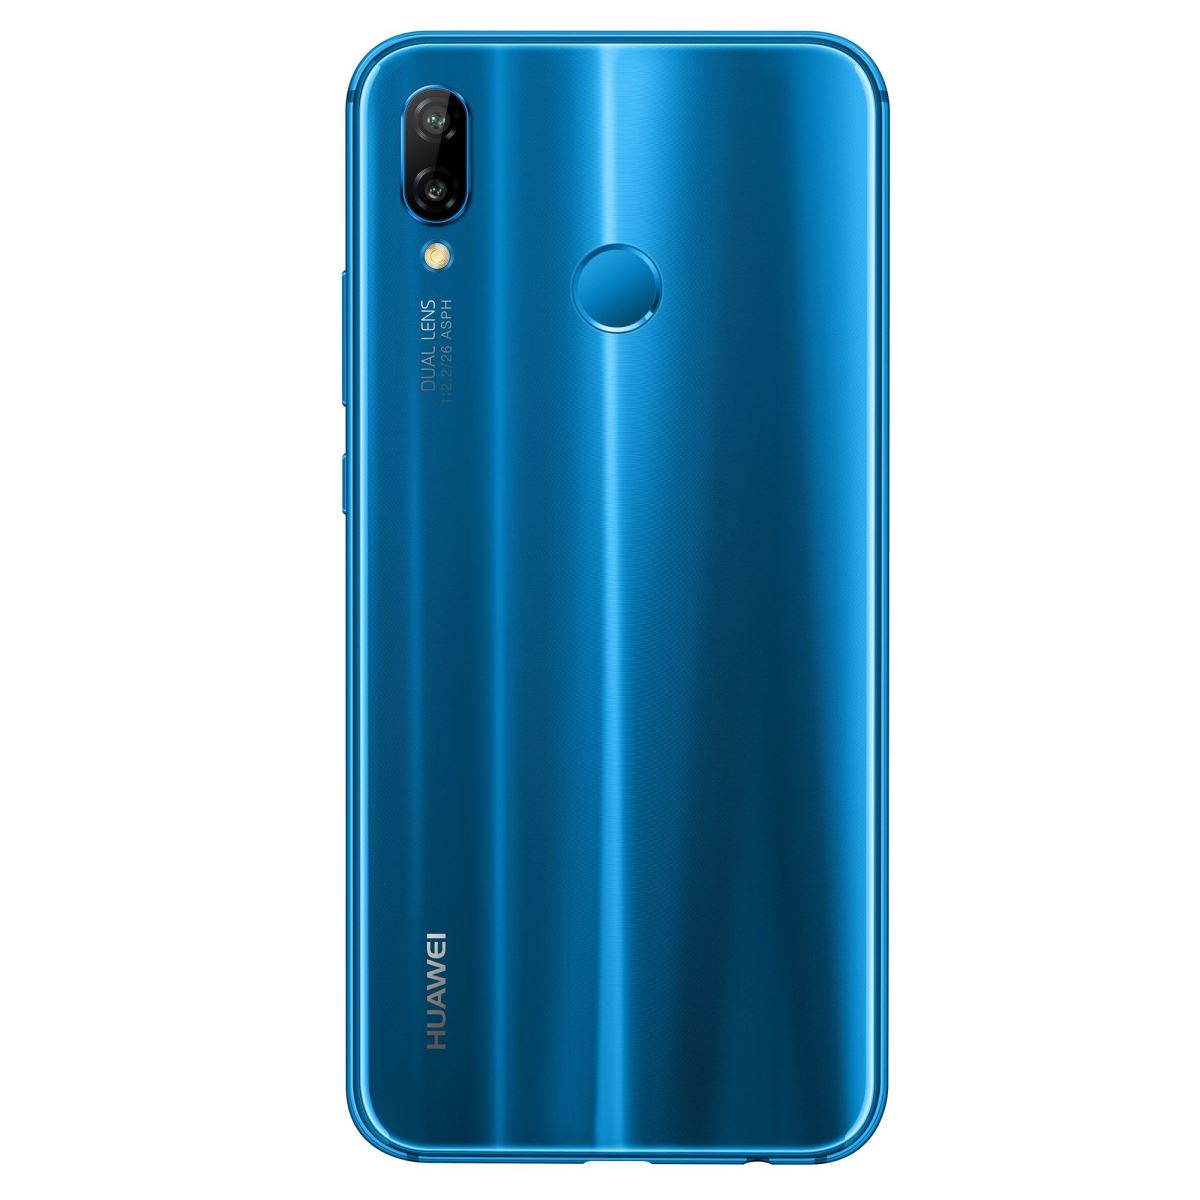 Huawei p20 lite 64gb klein blue dual sim test